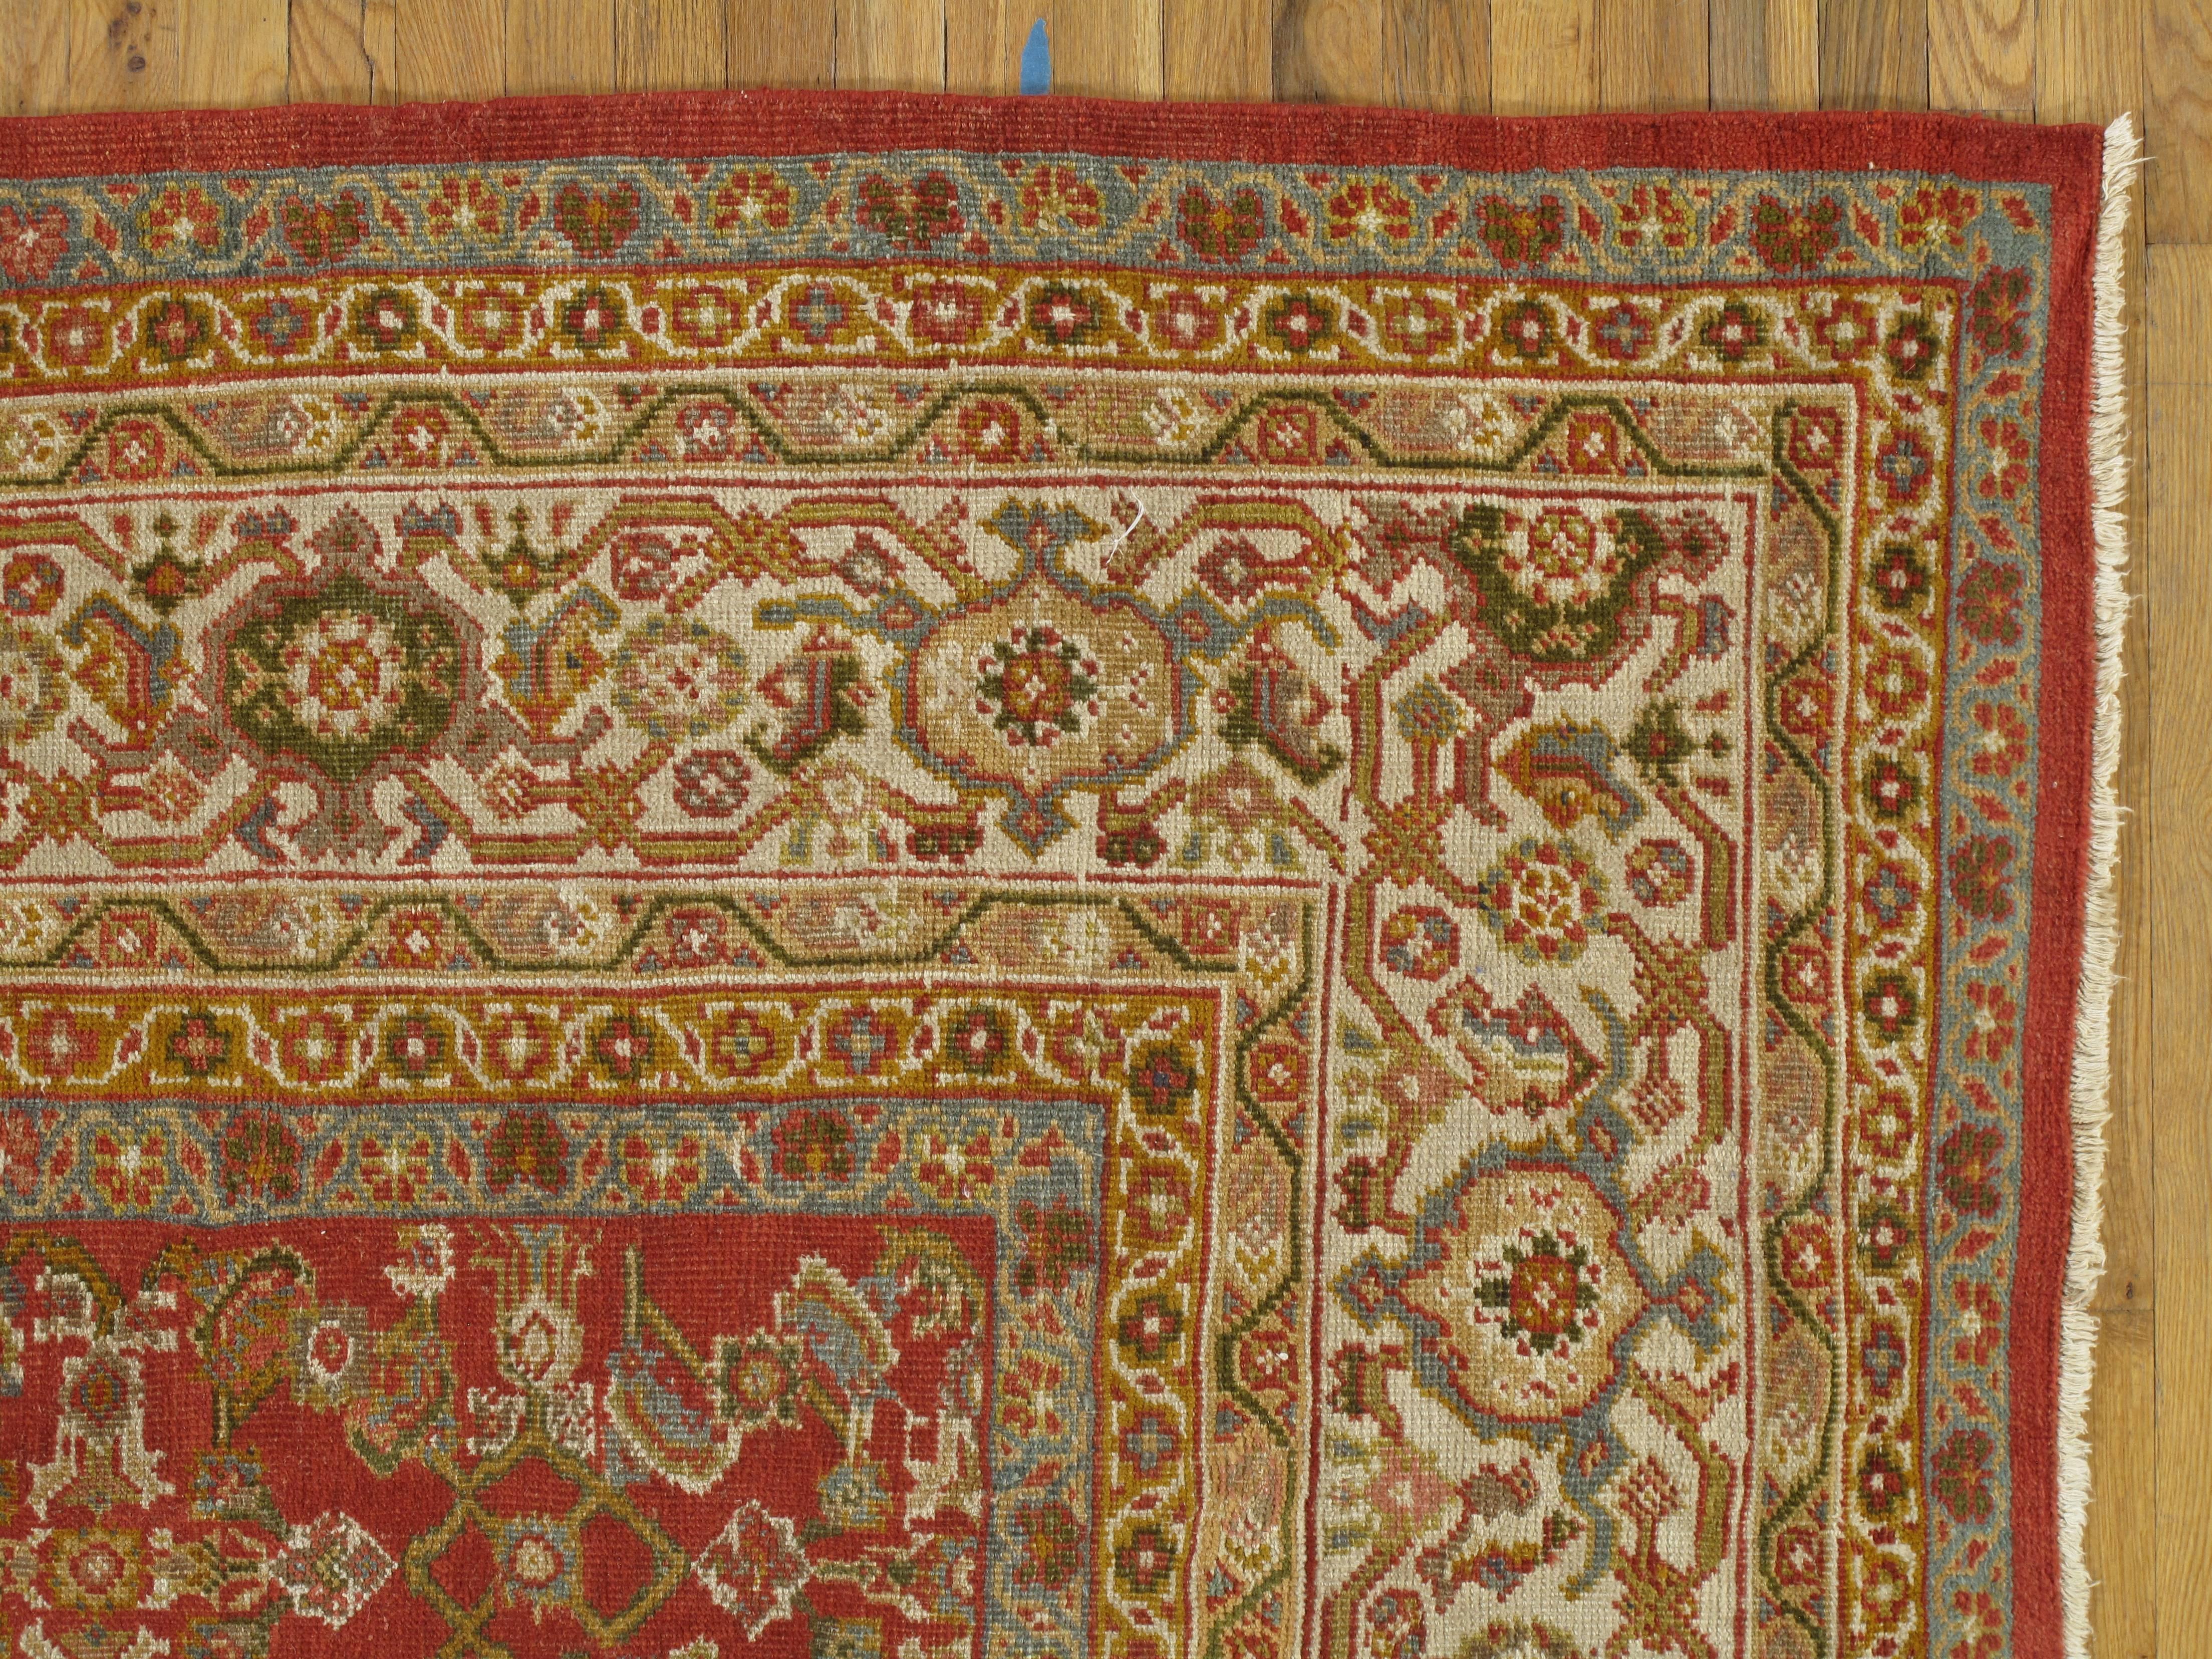 Persian Antique Sultanabad Carpet, Handmade Wool Carpet, Ivory, Rust, Green